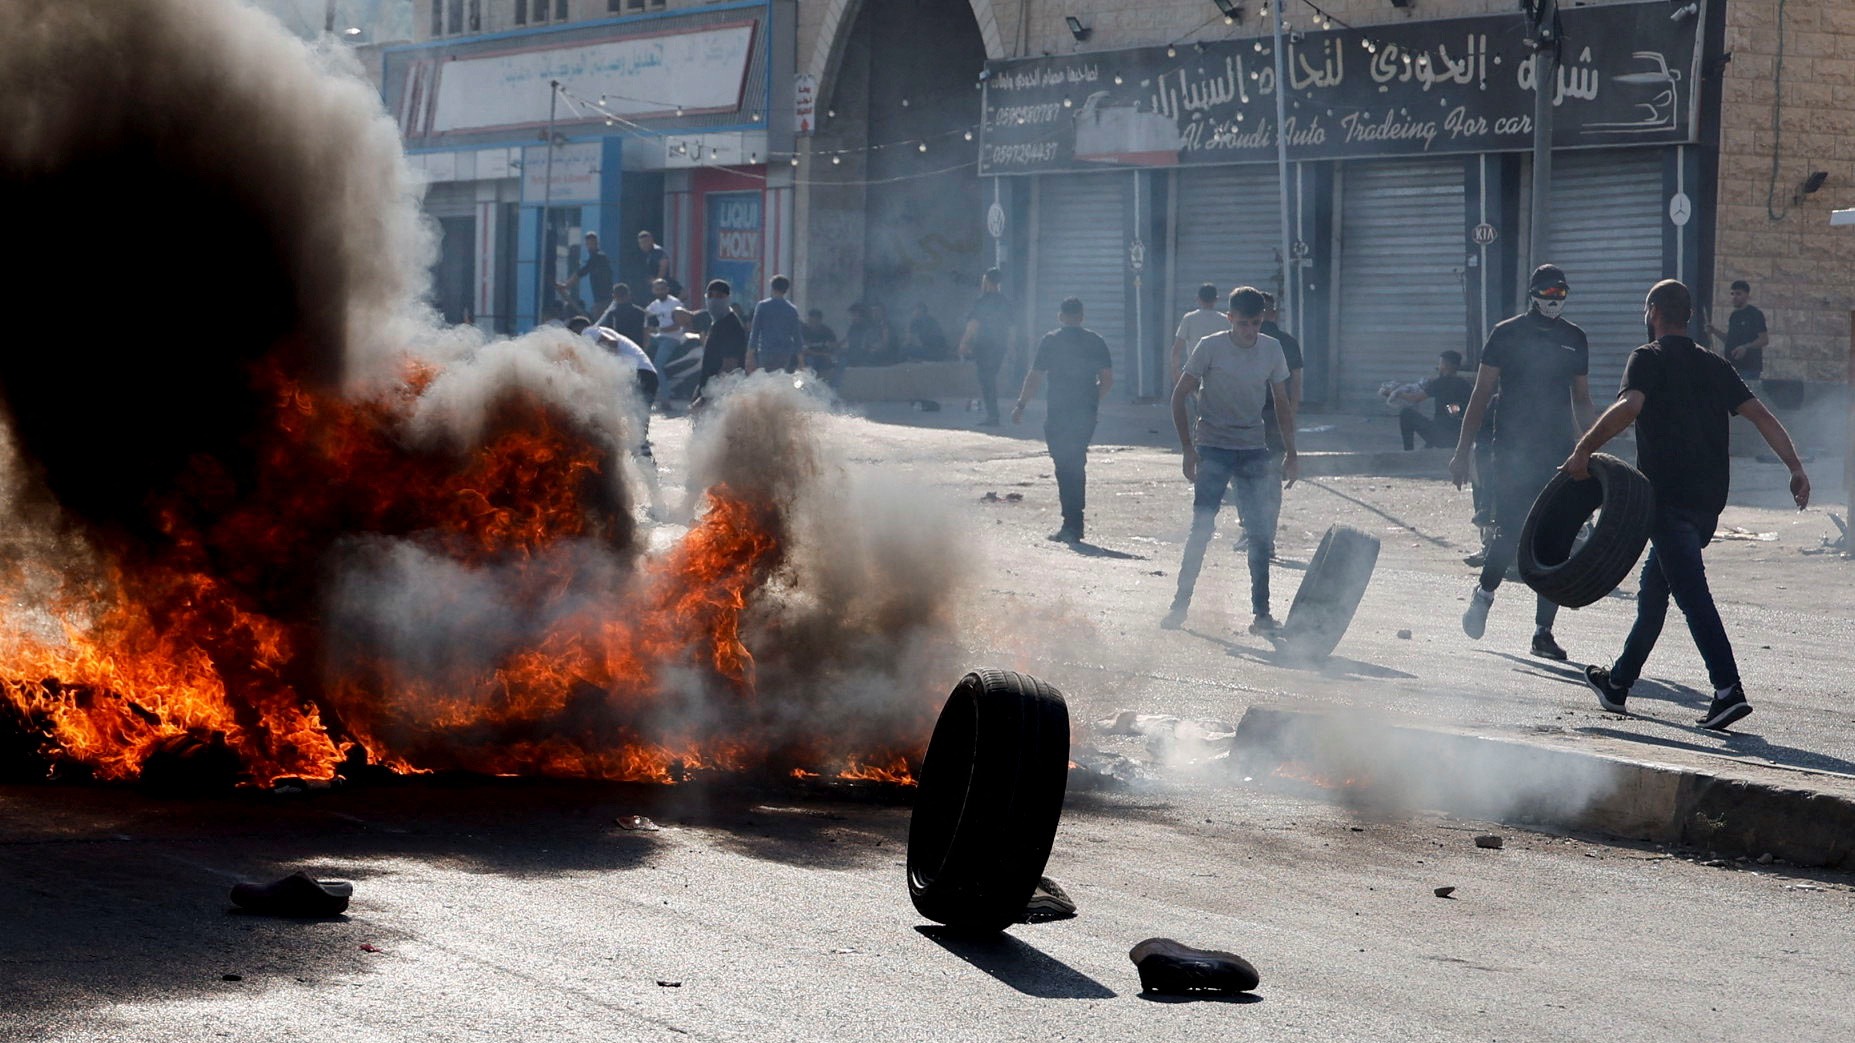 Palestinians protest following Israeli strikes on Gaza, in Nablus, in the Israeli-occupied West Bank. /Raneen Sawafta/Reuters